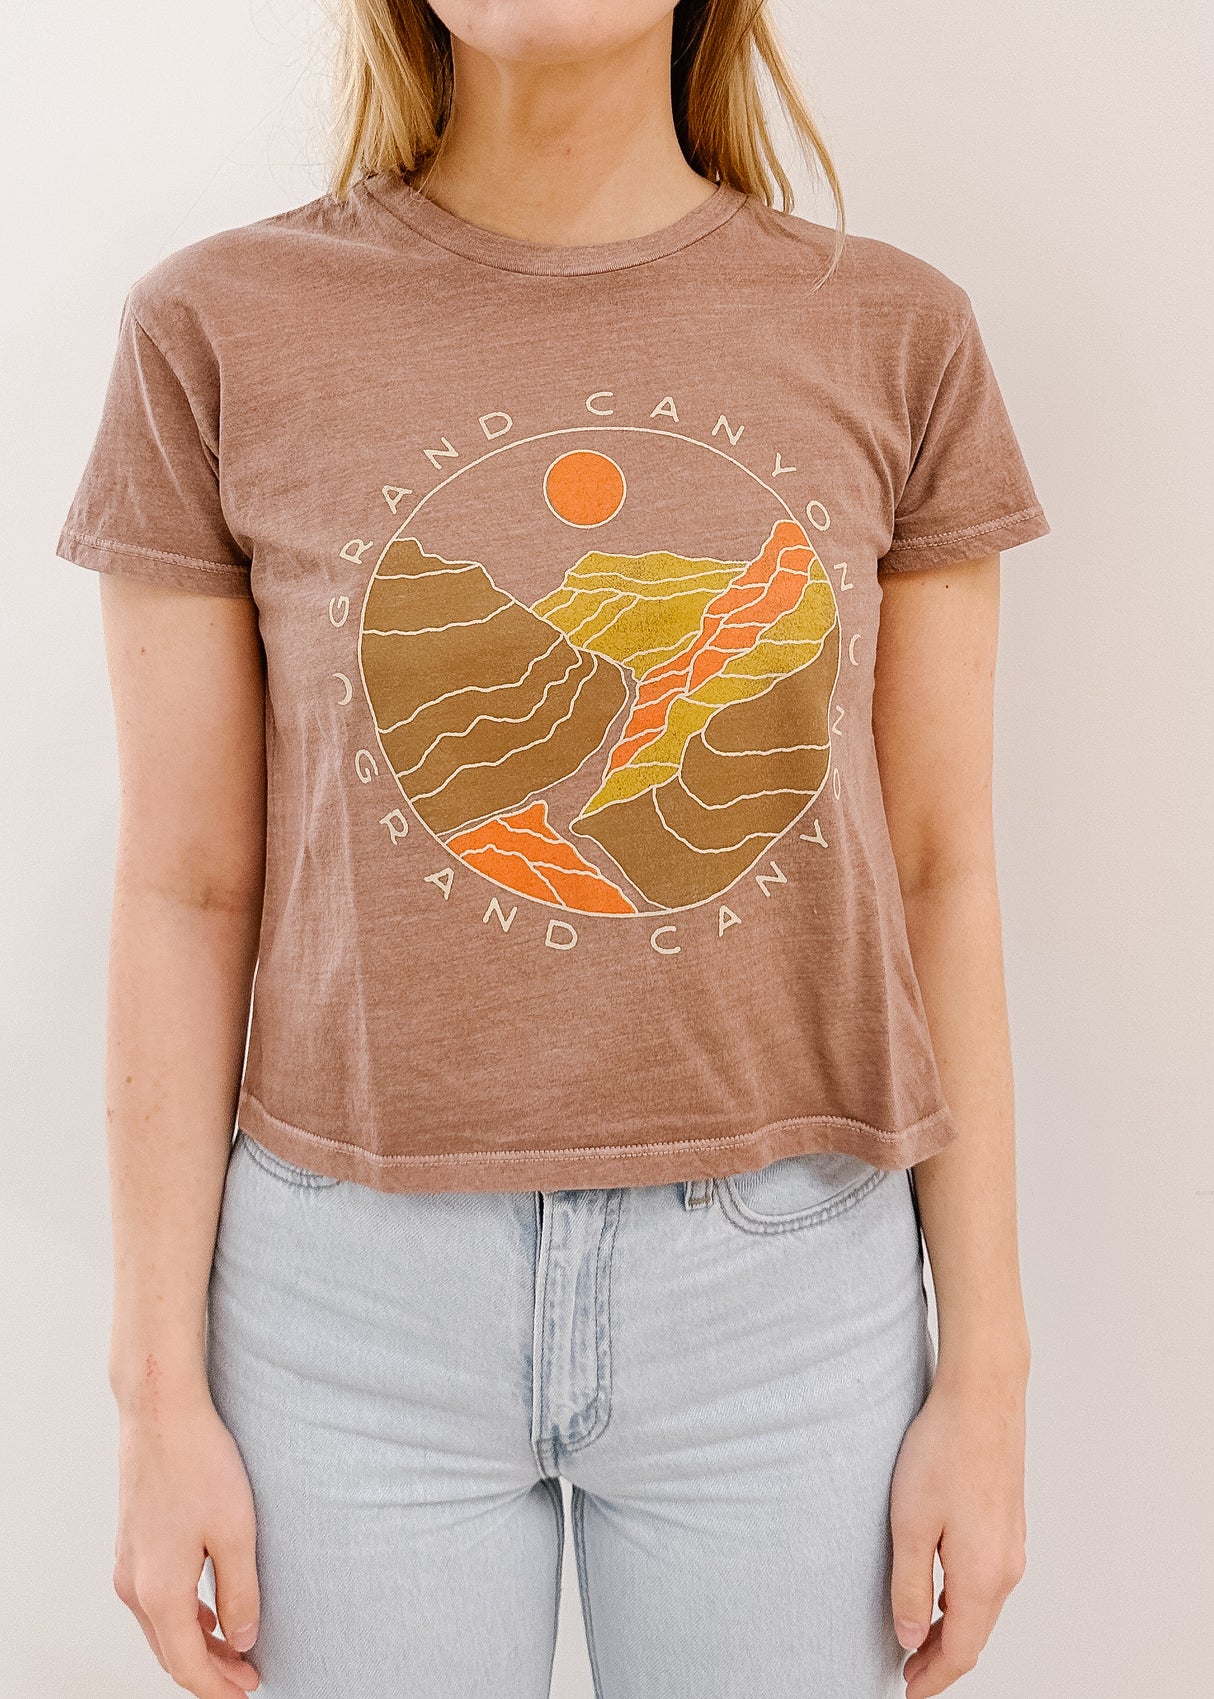 Grand Canyon Girlfriend T-Shirt